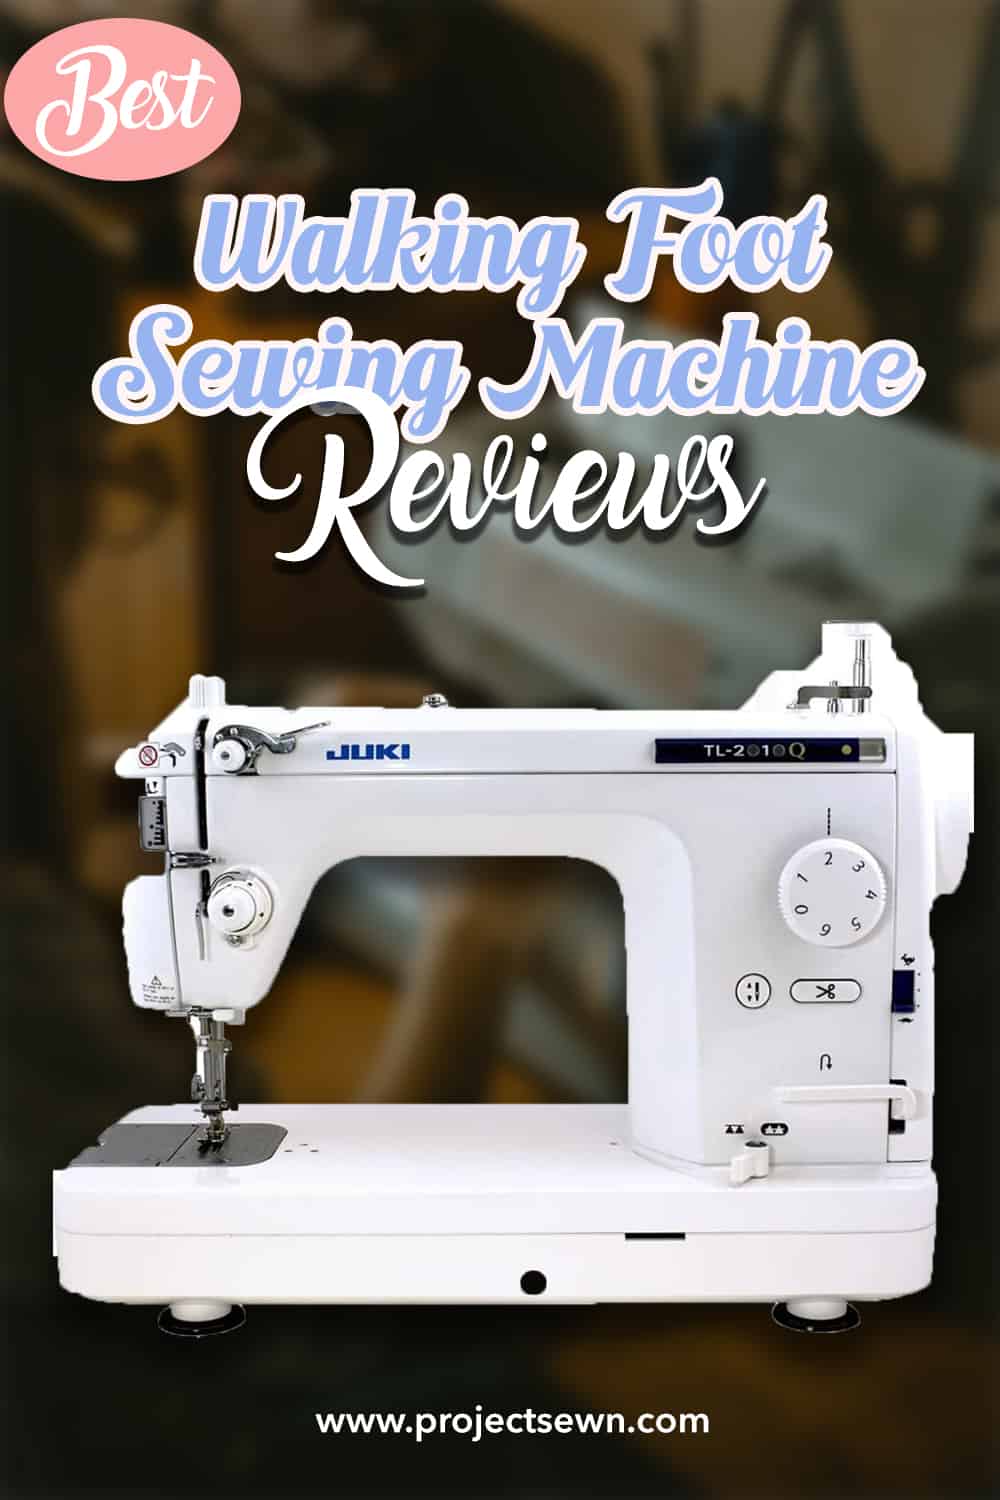 Best Walking Foot Sewing Machine 